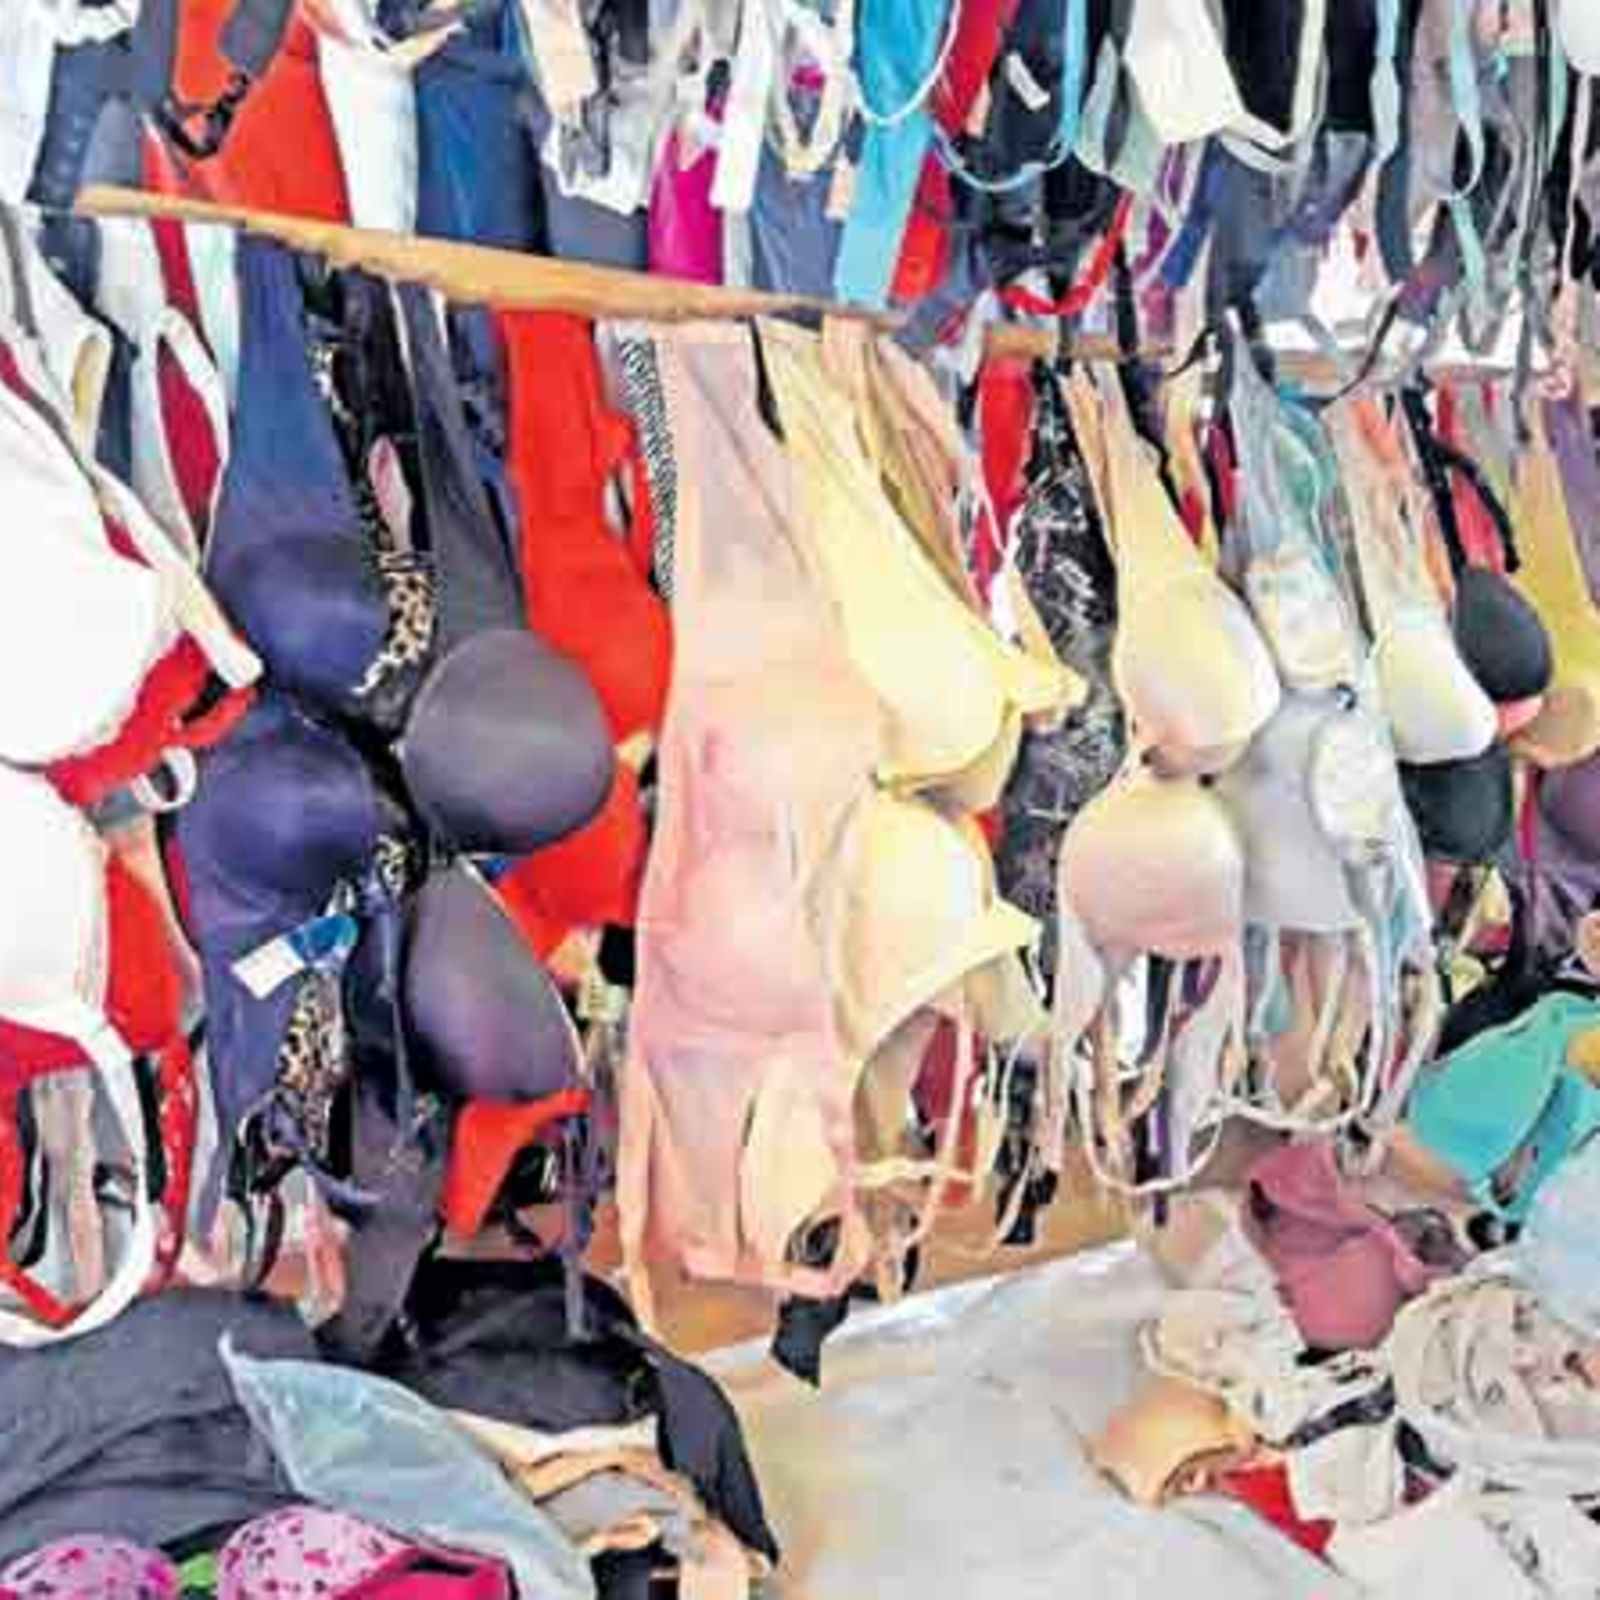 On women buying used underwear